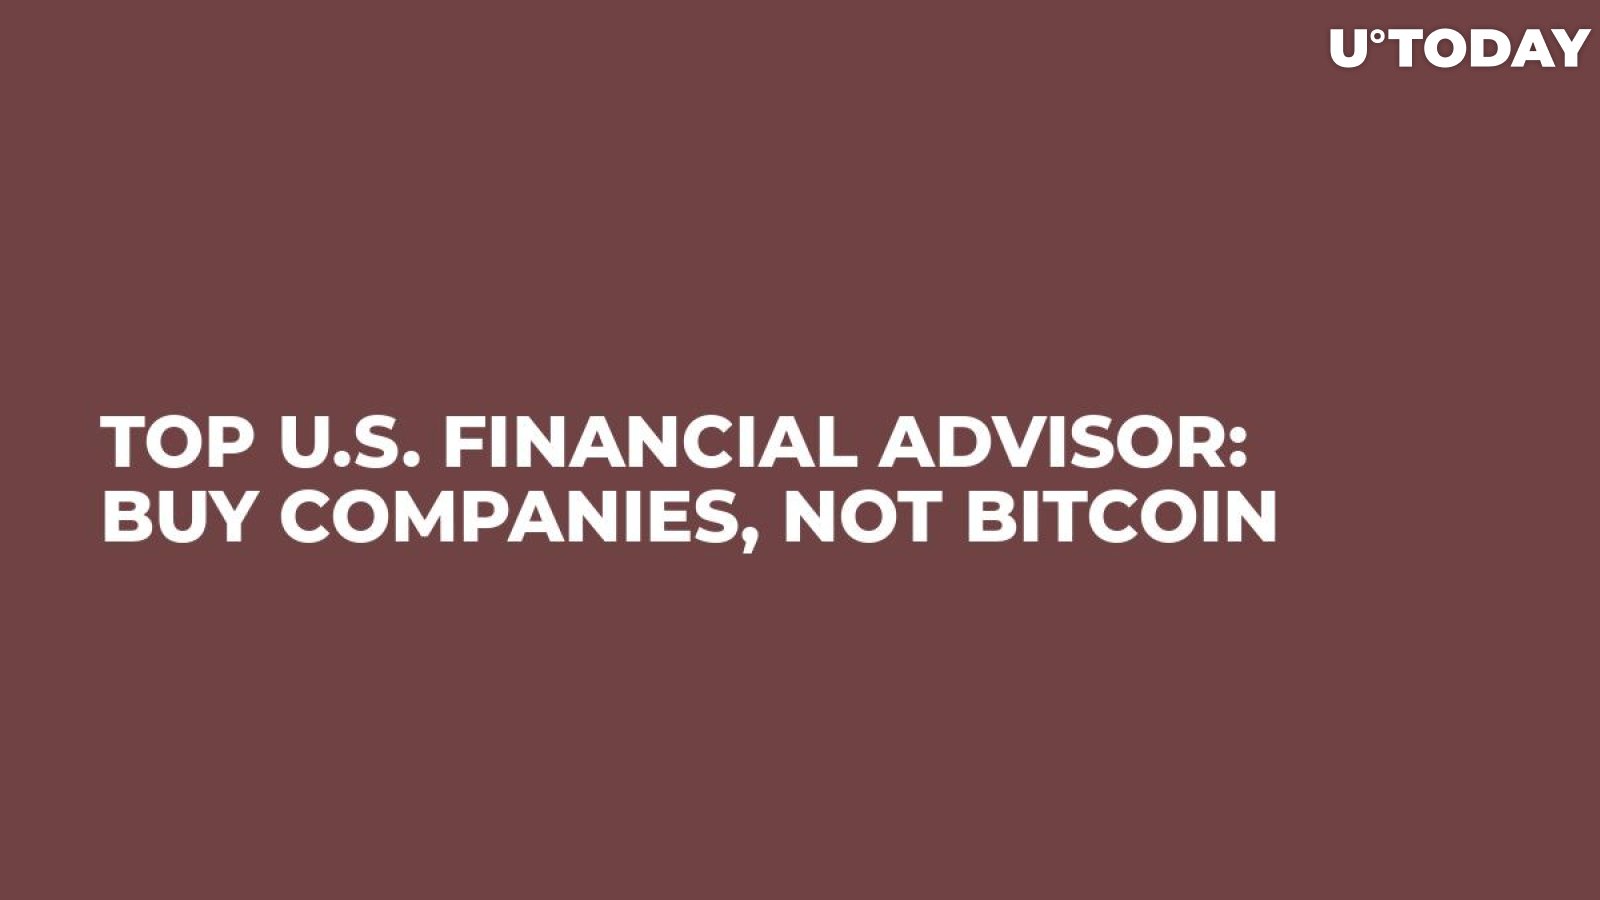 Top U.S. Financial Advisor: Buy Companies, Not Bitcoin